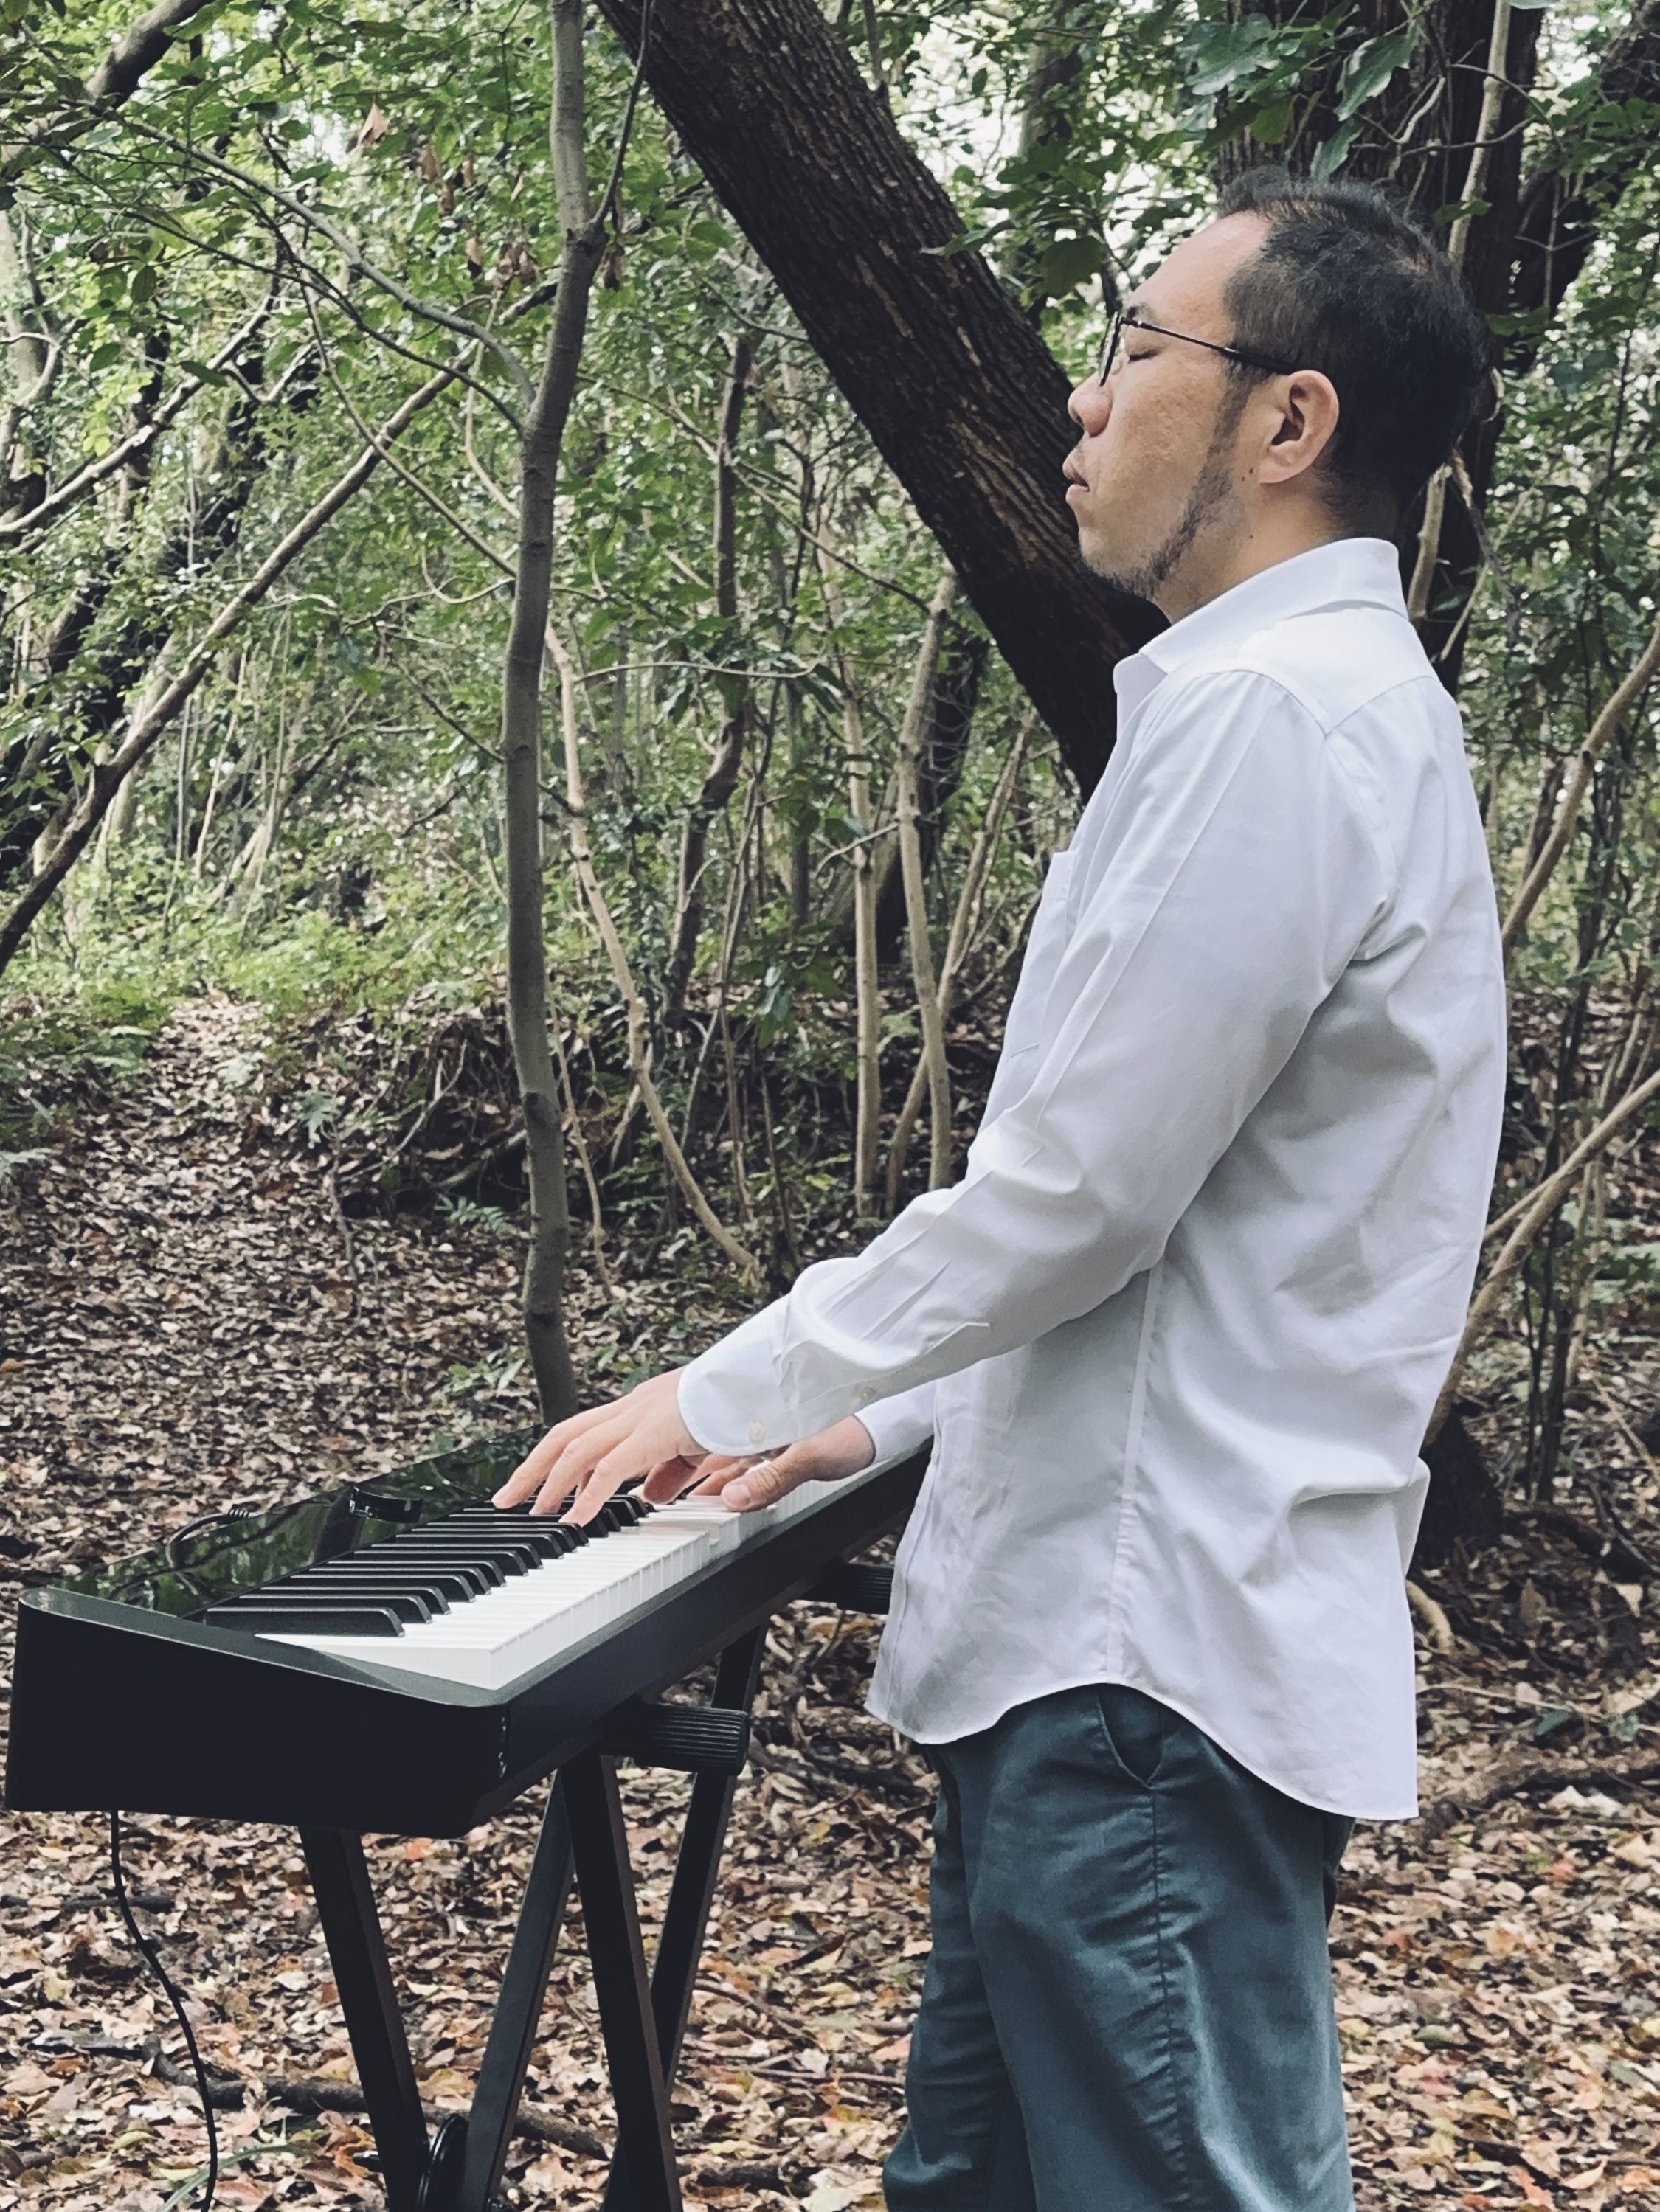 awai / pianist